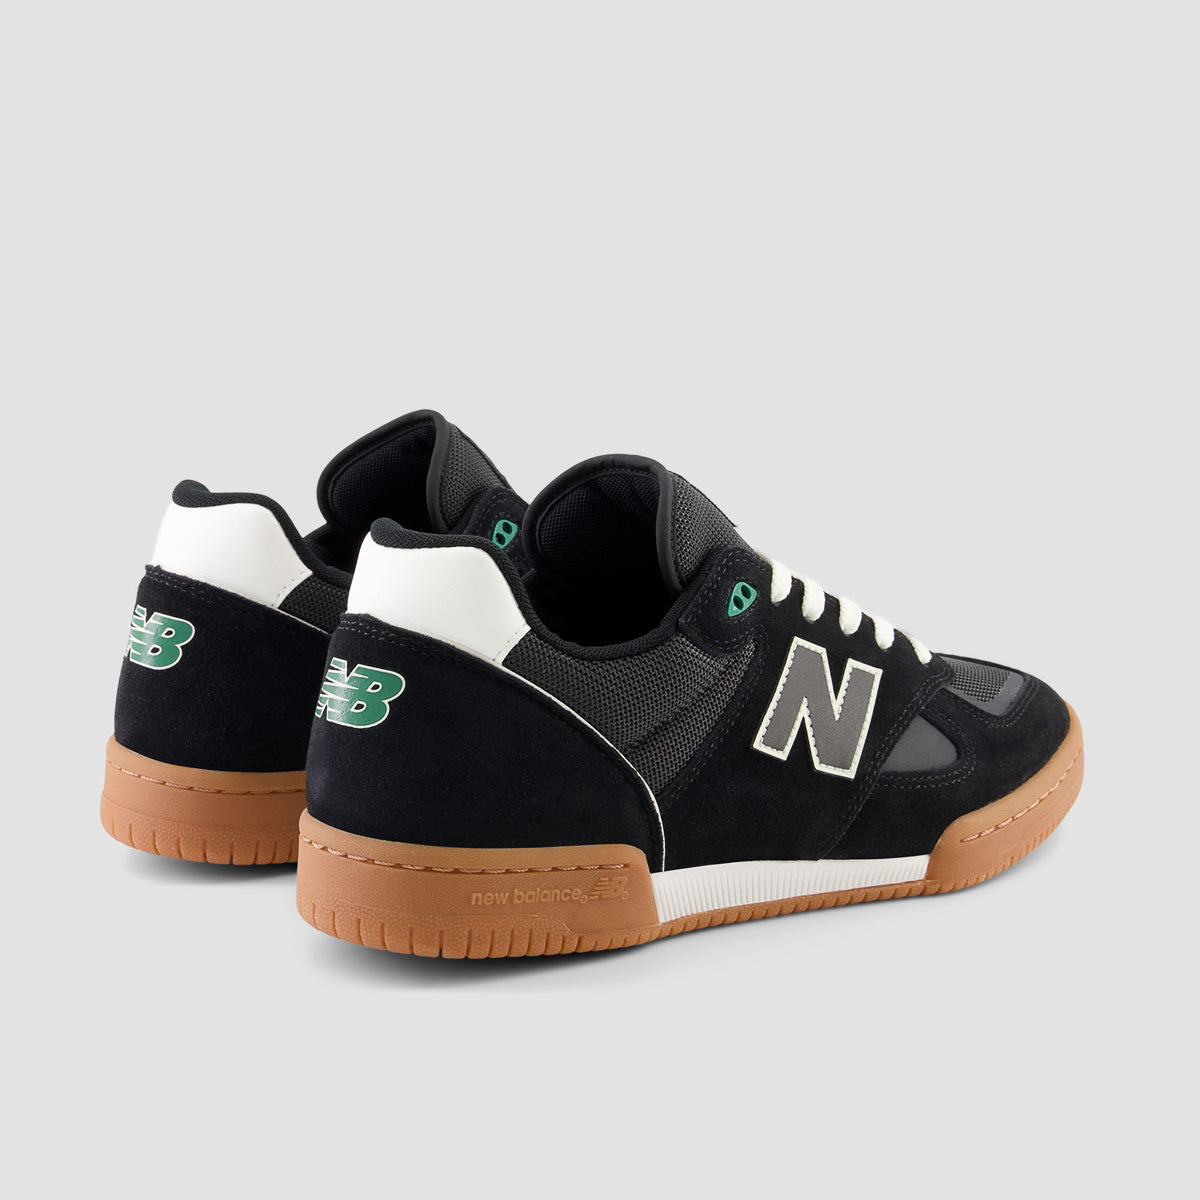 New Balance Numeric Tom Knox 600 Shoes - Black/Gum